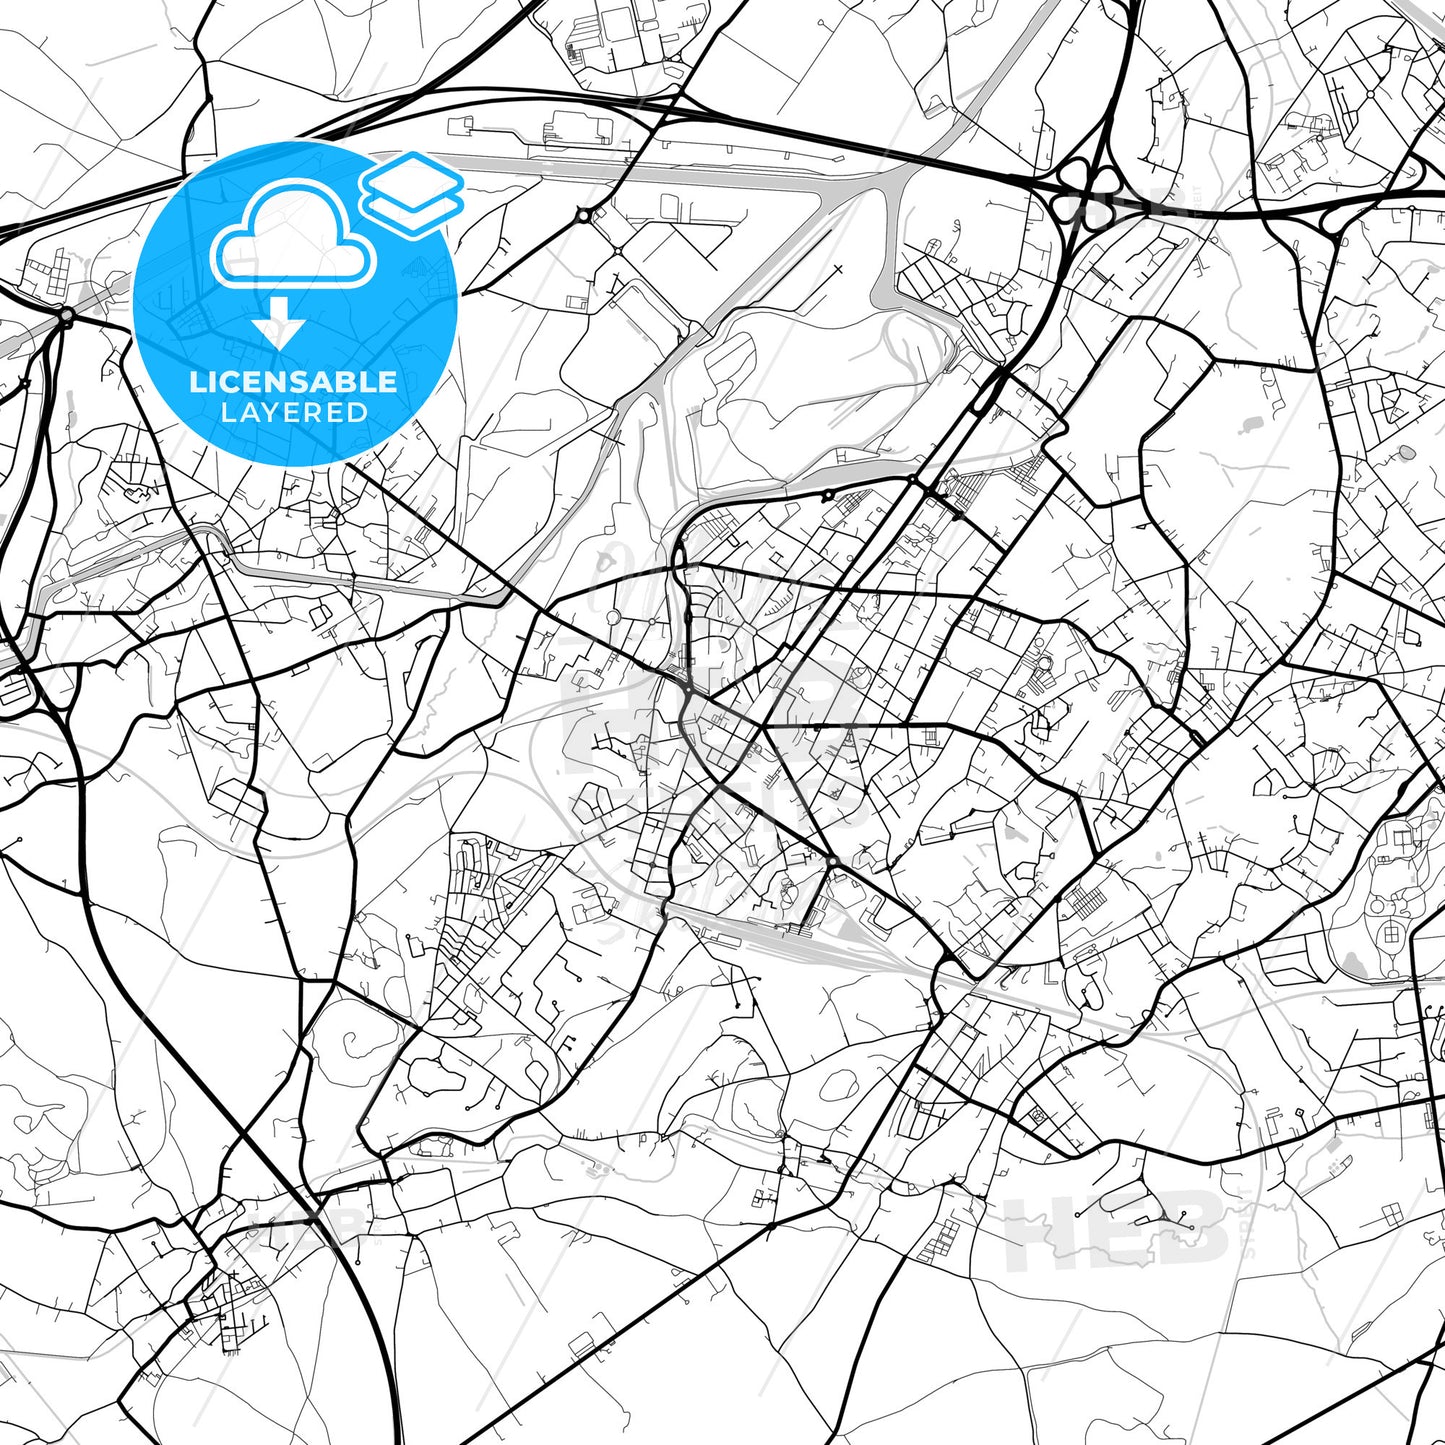 Layered PDF map of La Louvière, Hainaut, Belgium